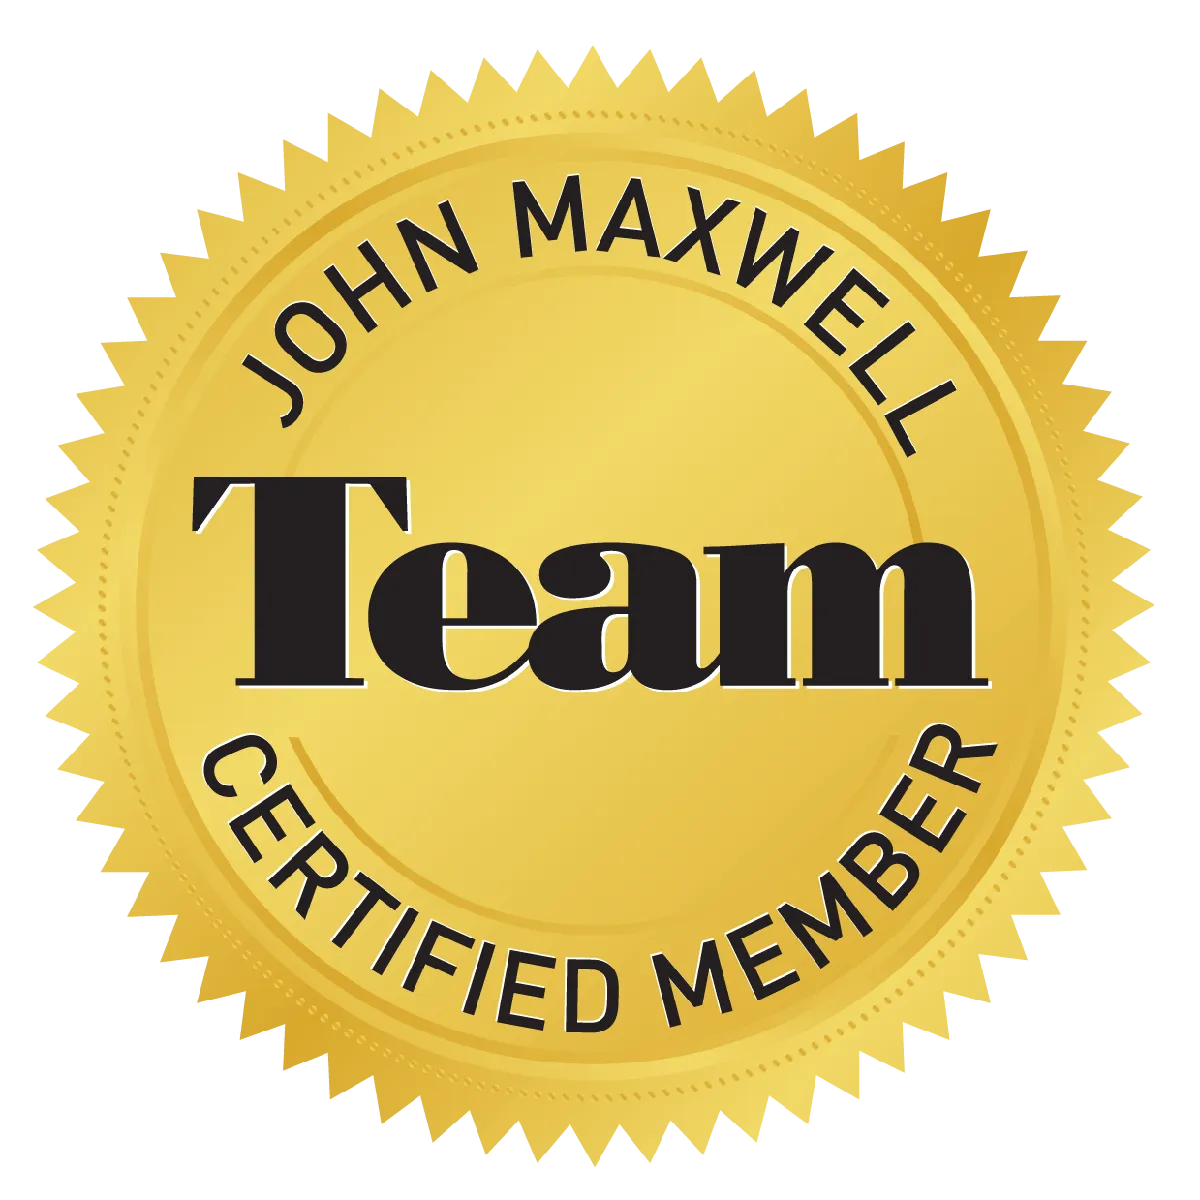 John Maxwell Team Certified Member Fredie C. Smith